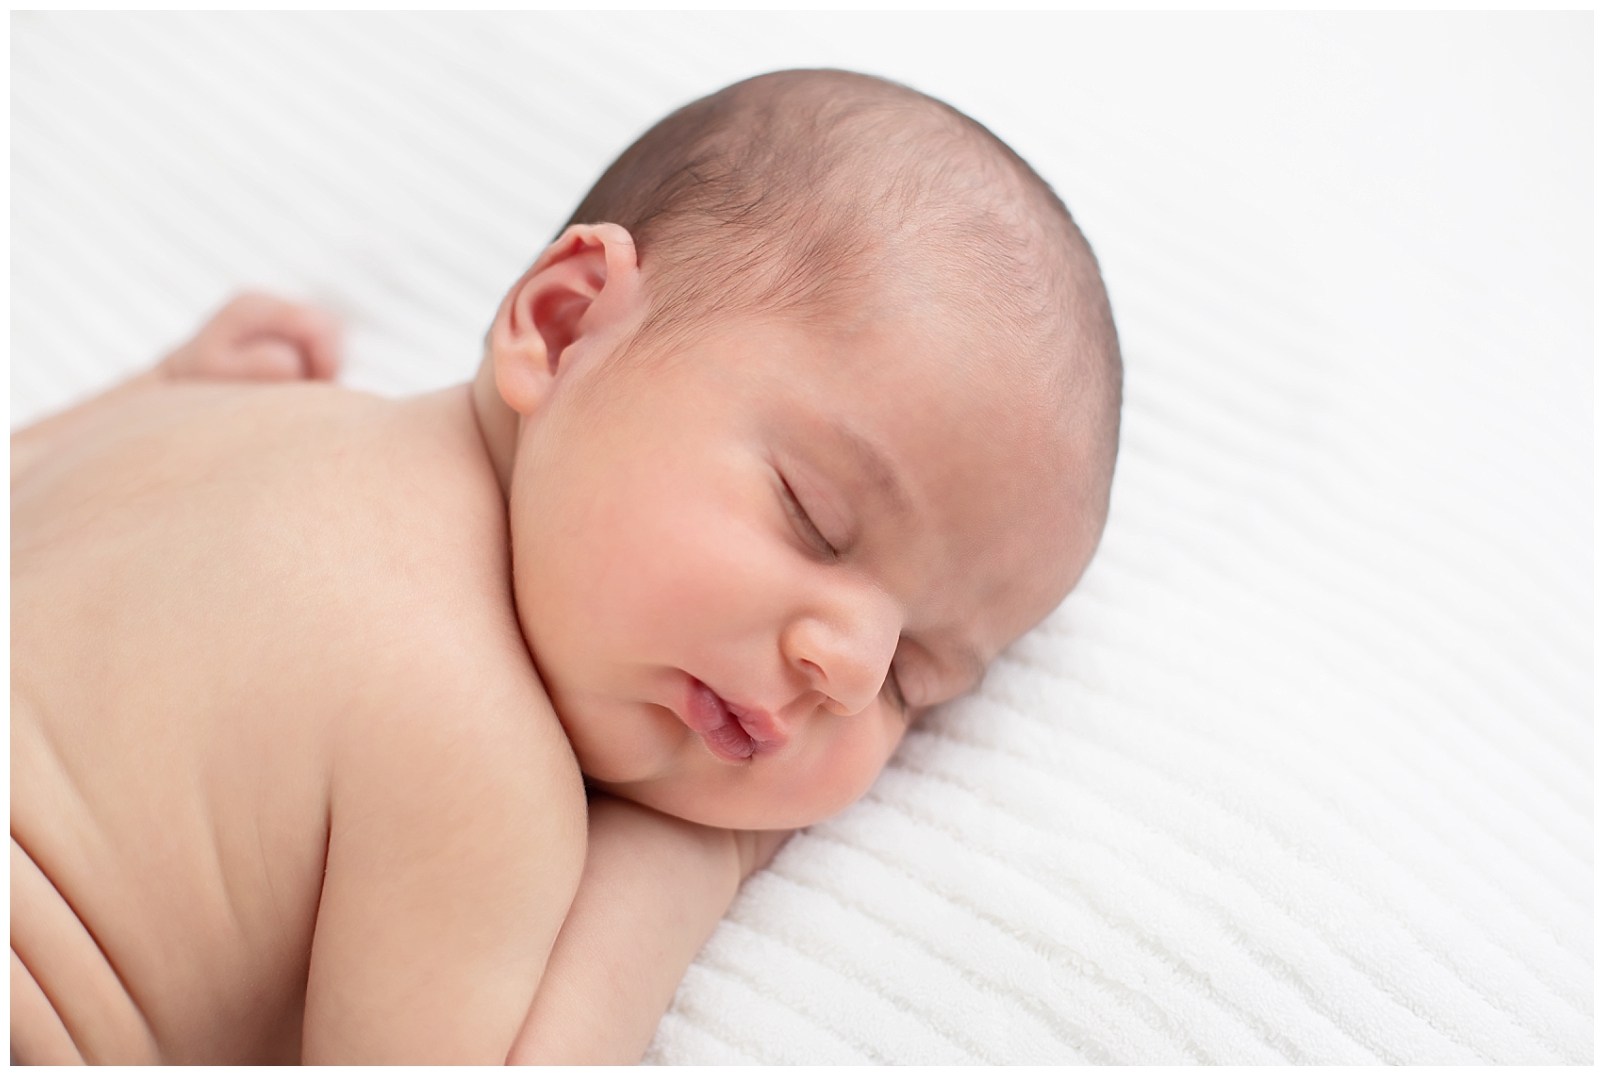 newborn on tummy sleeping